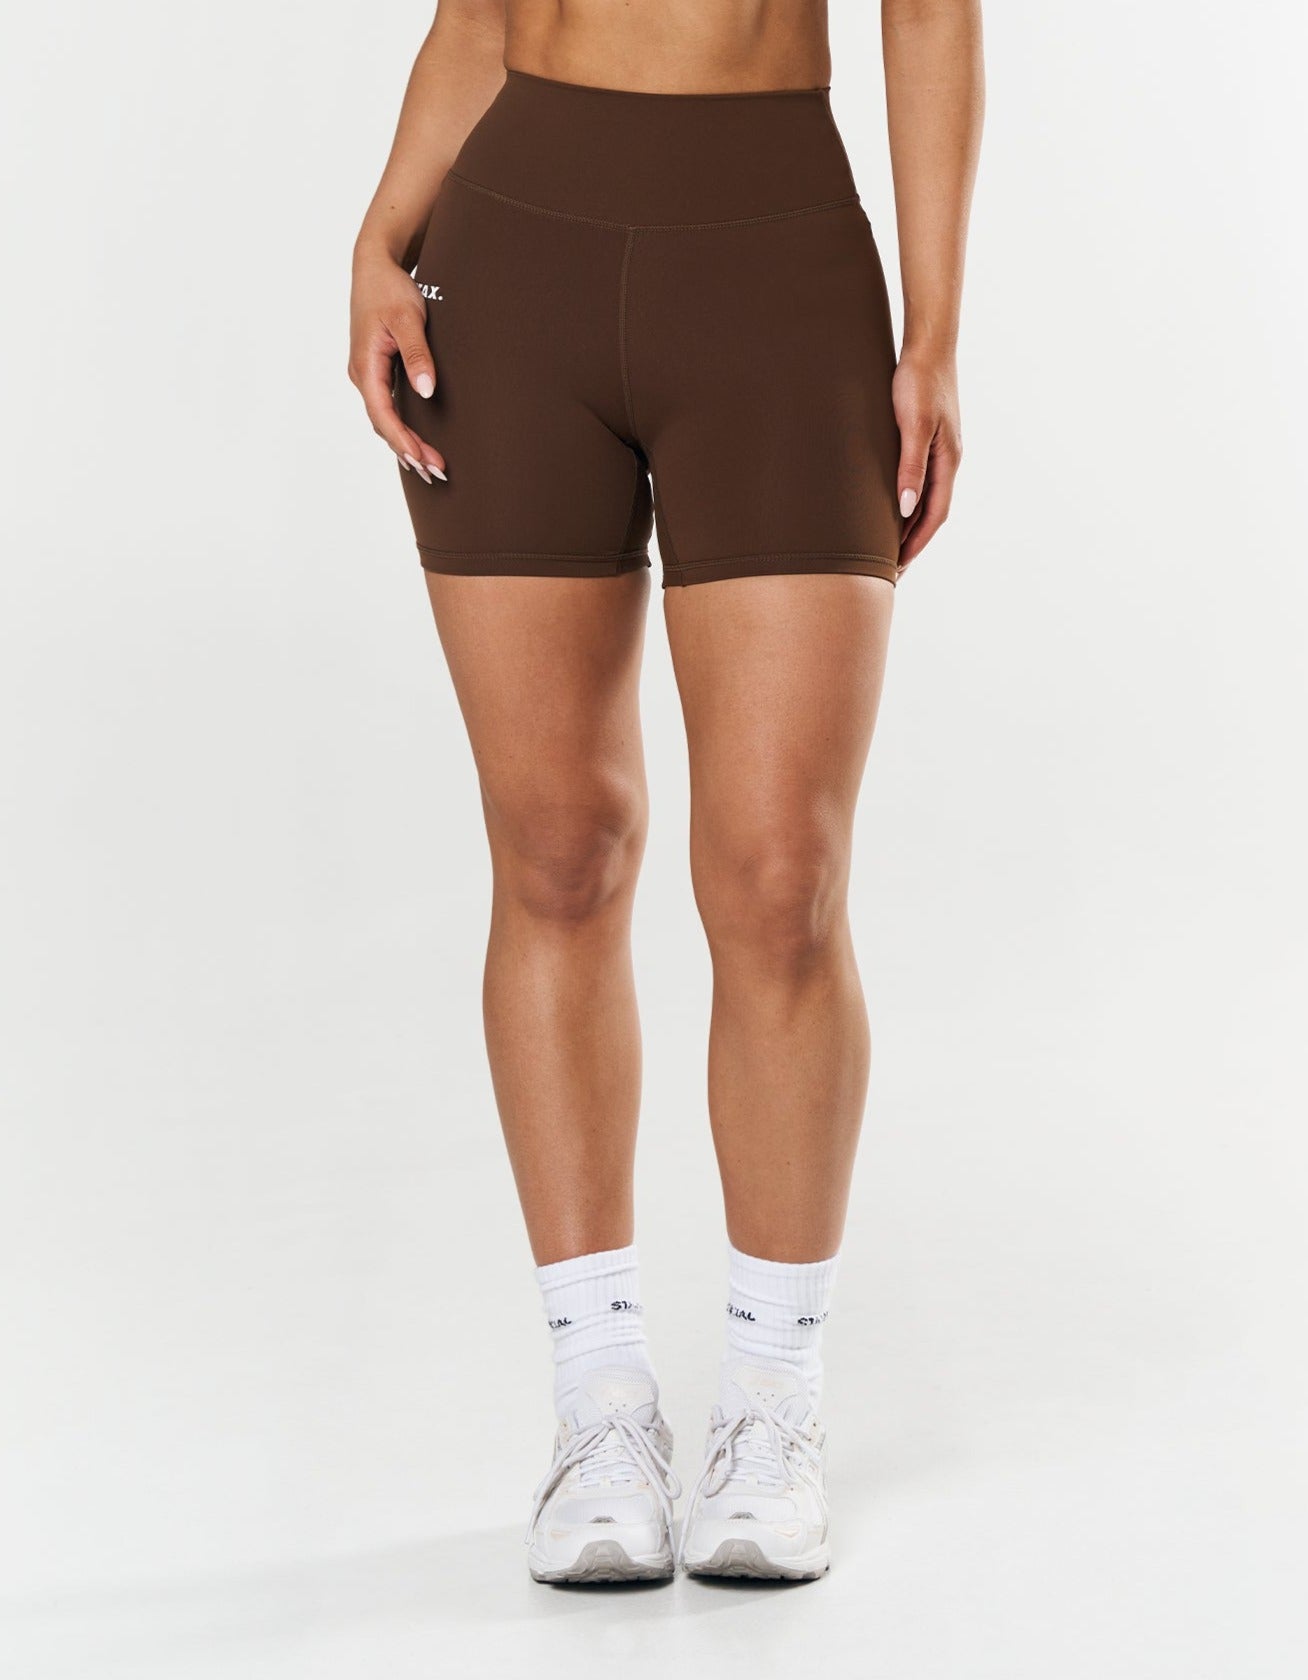 STAX. Midi Bike Shorts NANDEX ™ Raw Umber - Brown